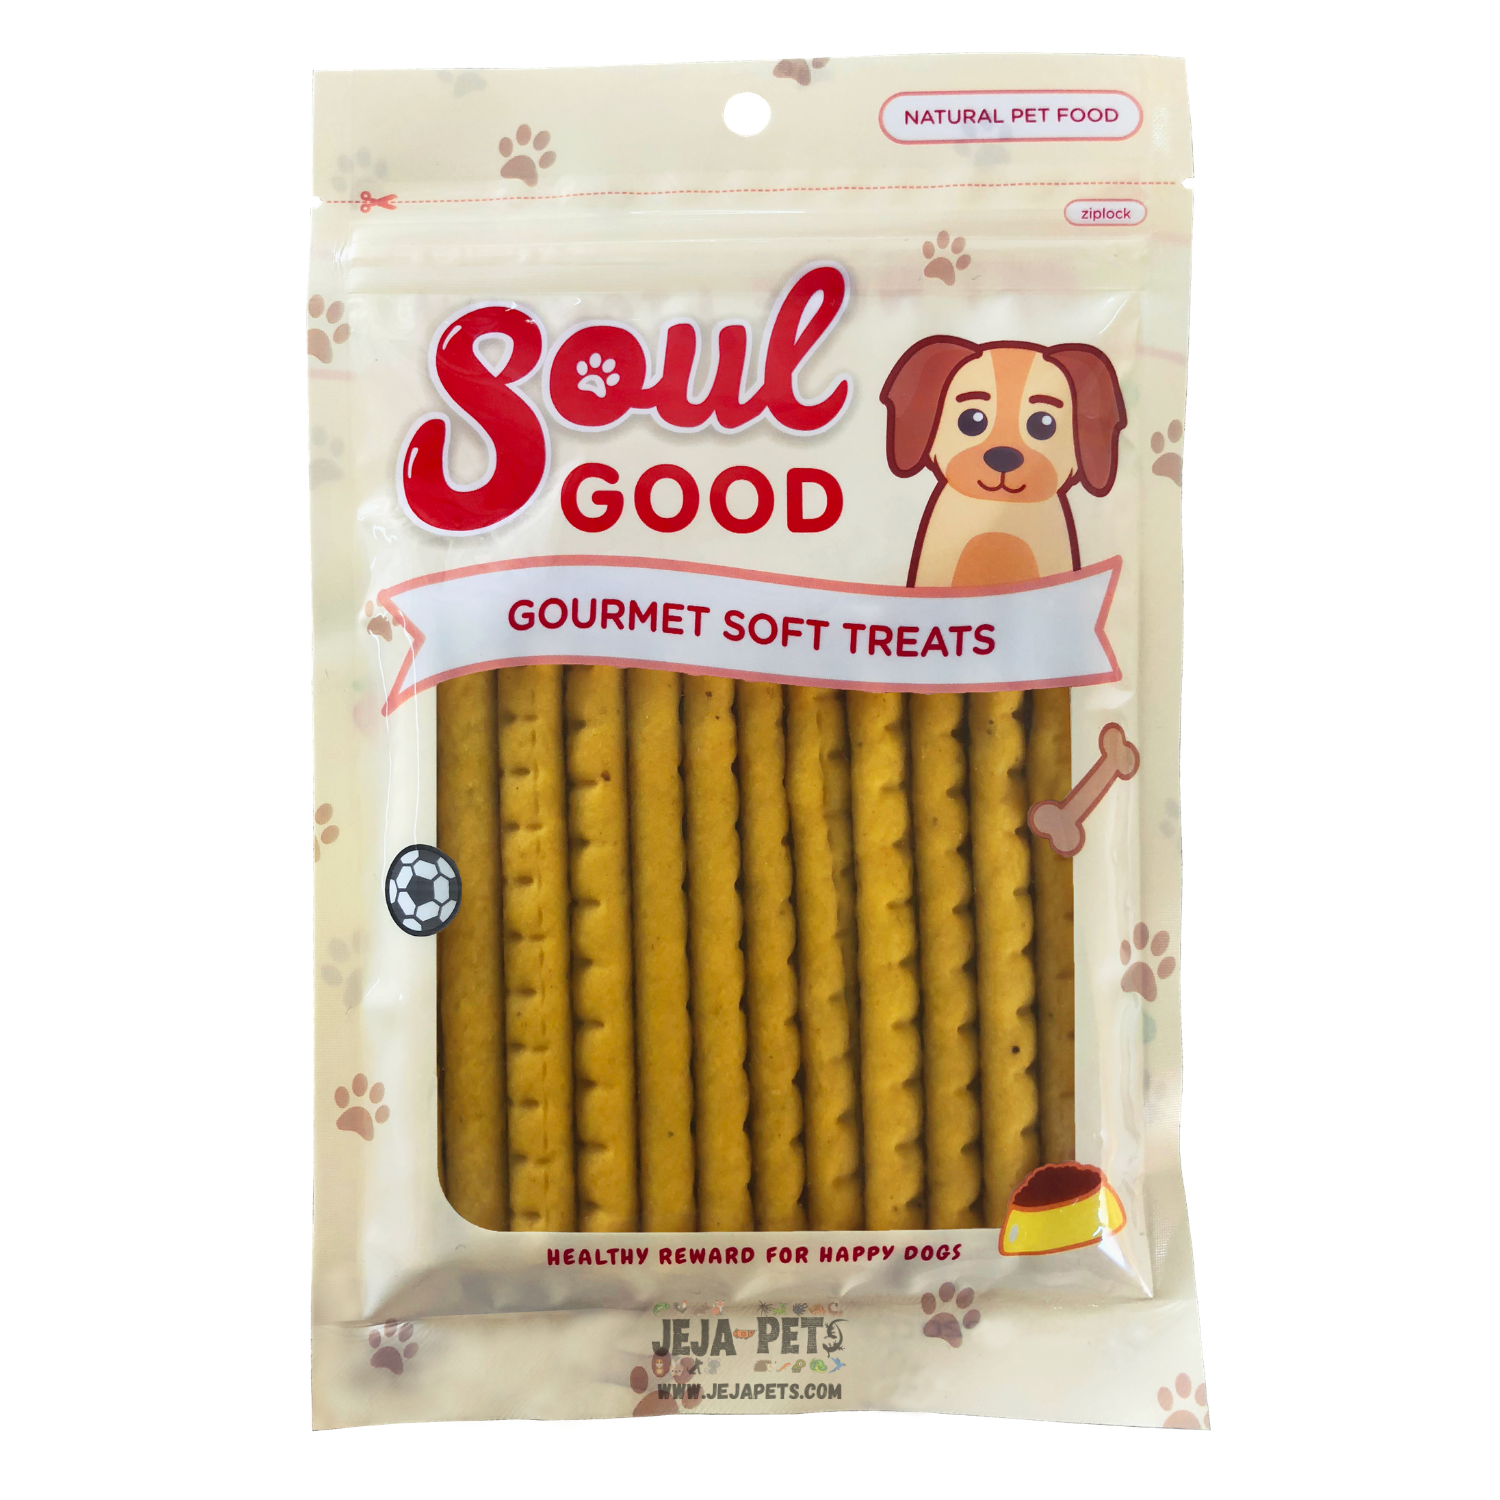 [DISCONTINUED] Soul Good Gourmet Soft Treats (Banana) - 100g